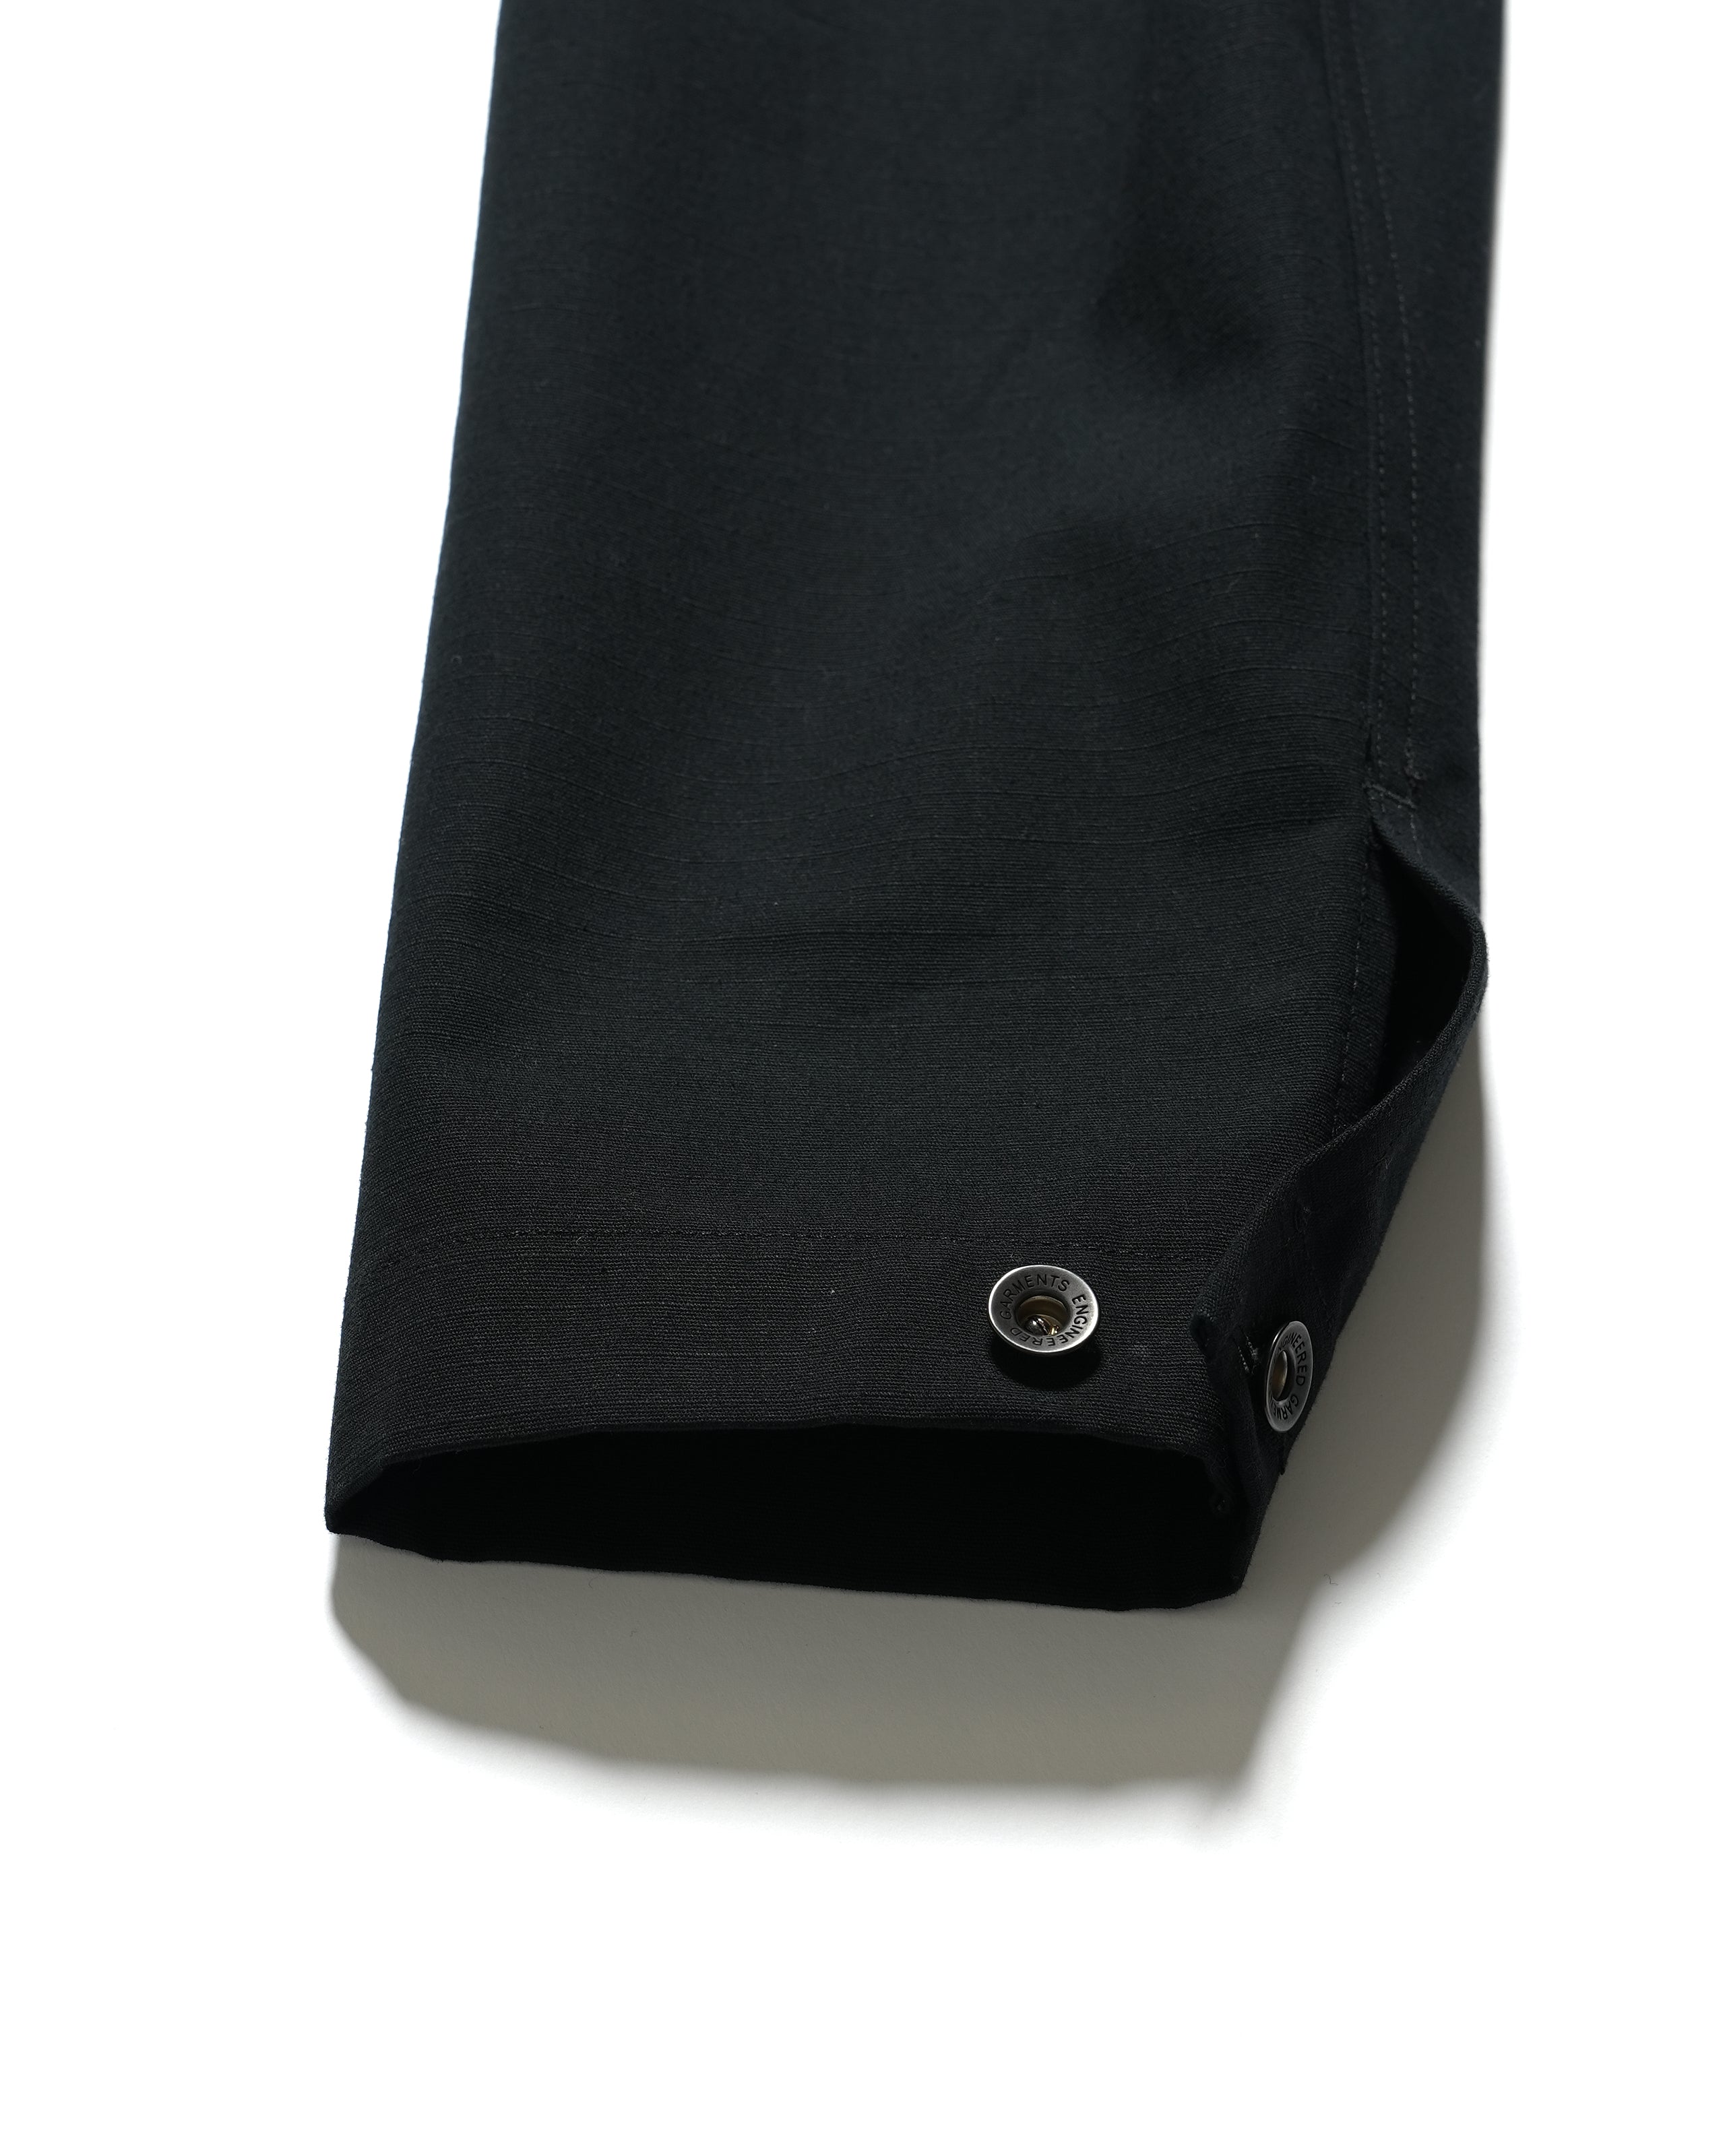 Engineered Garments Workaday Fatigue Pant Combo - Black Heavyweight Cotton Ripstop